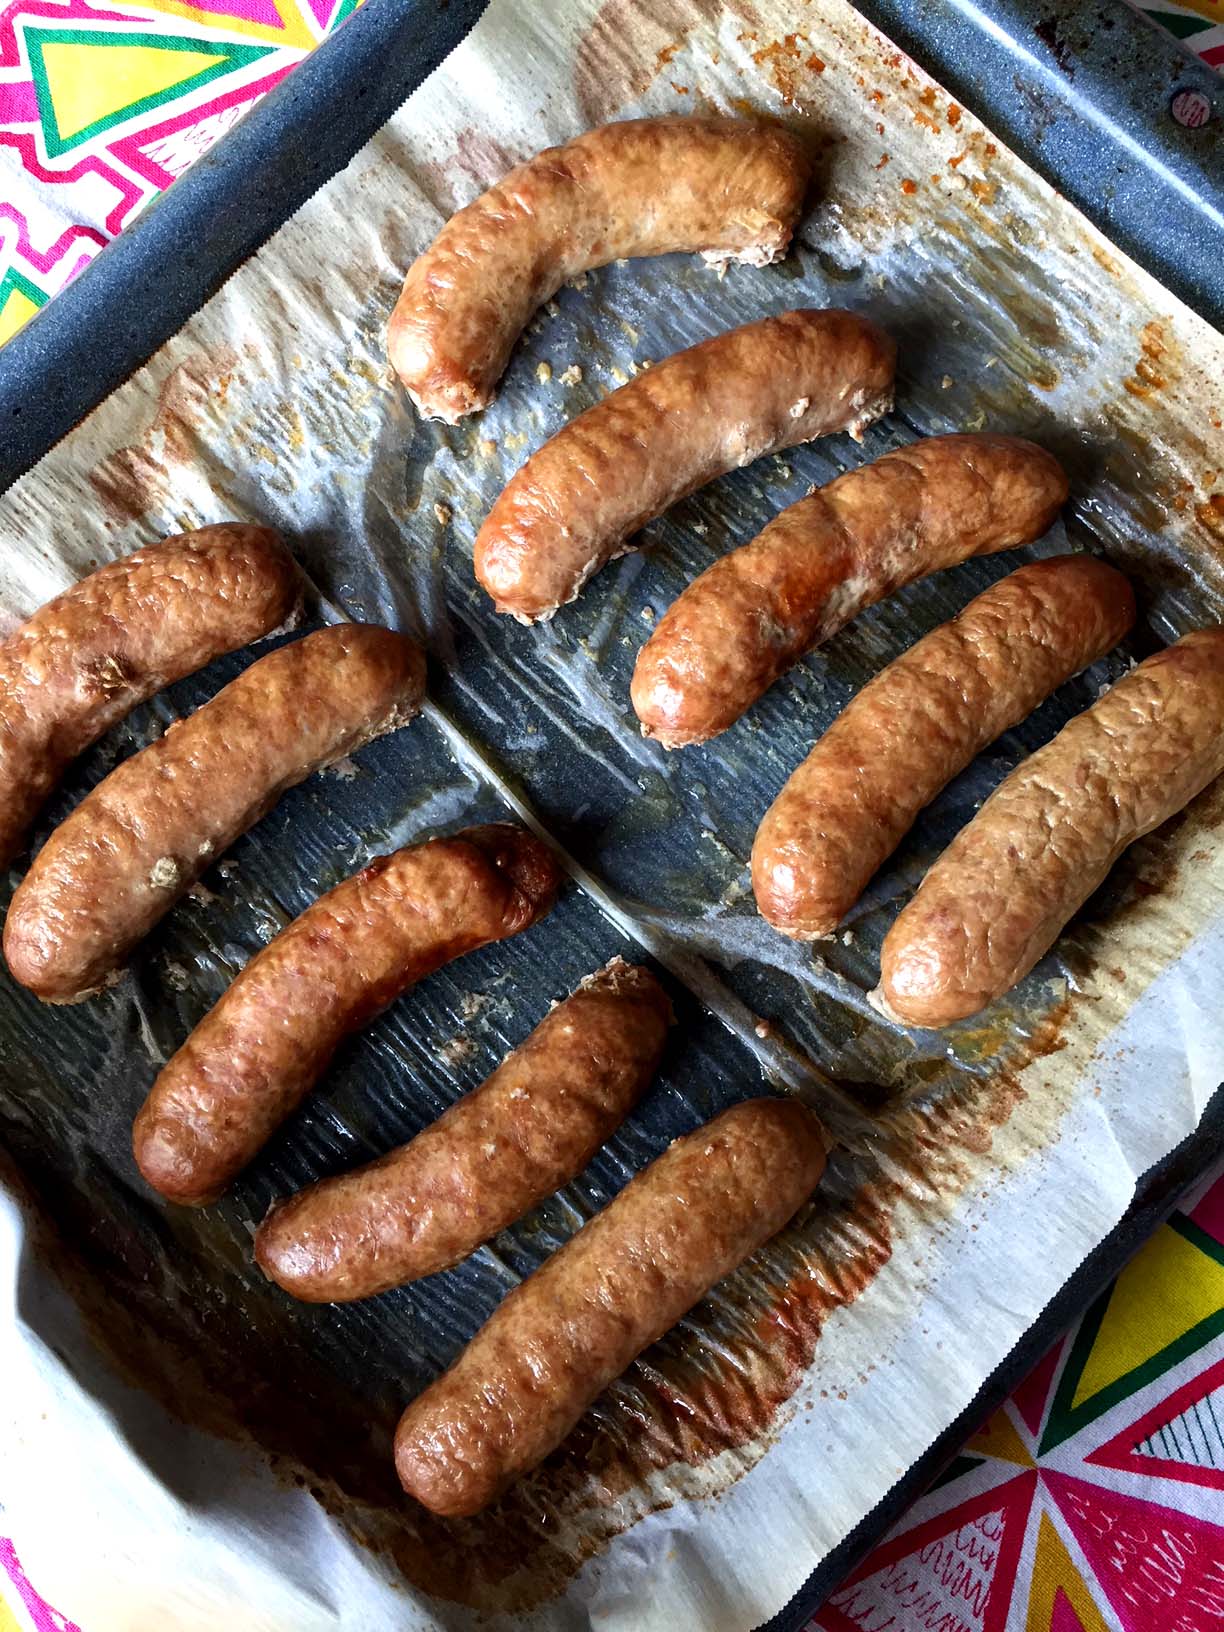 https://www.melaniecooks.com/wp-content/uploads/2017/11/baked_italian_sausages_oven.jpg